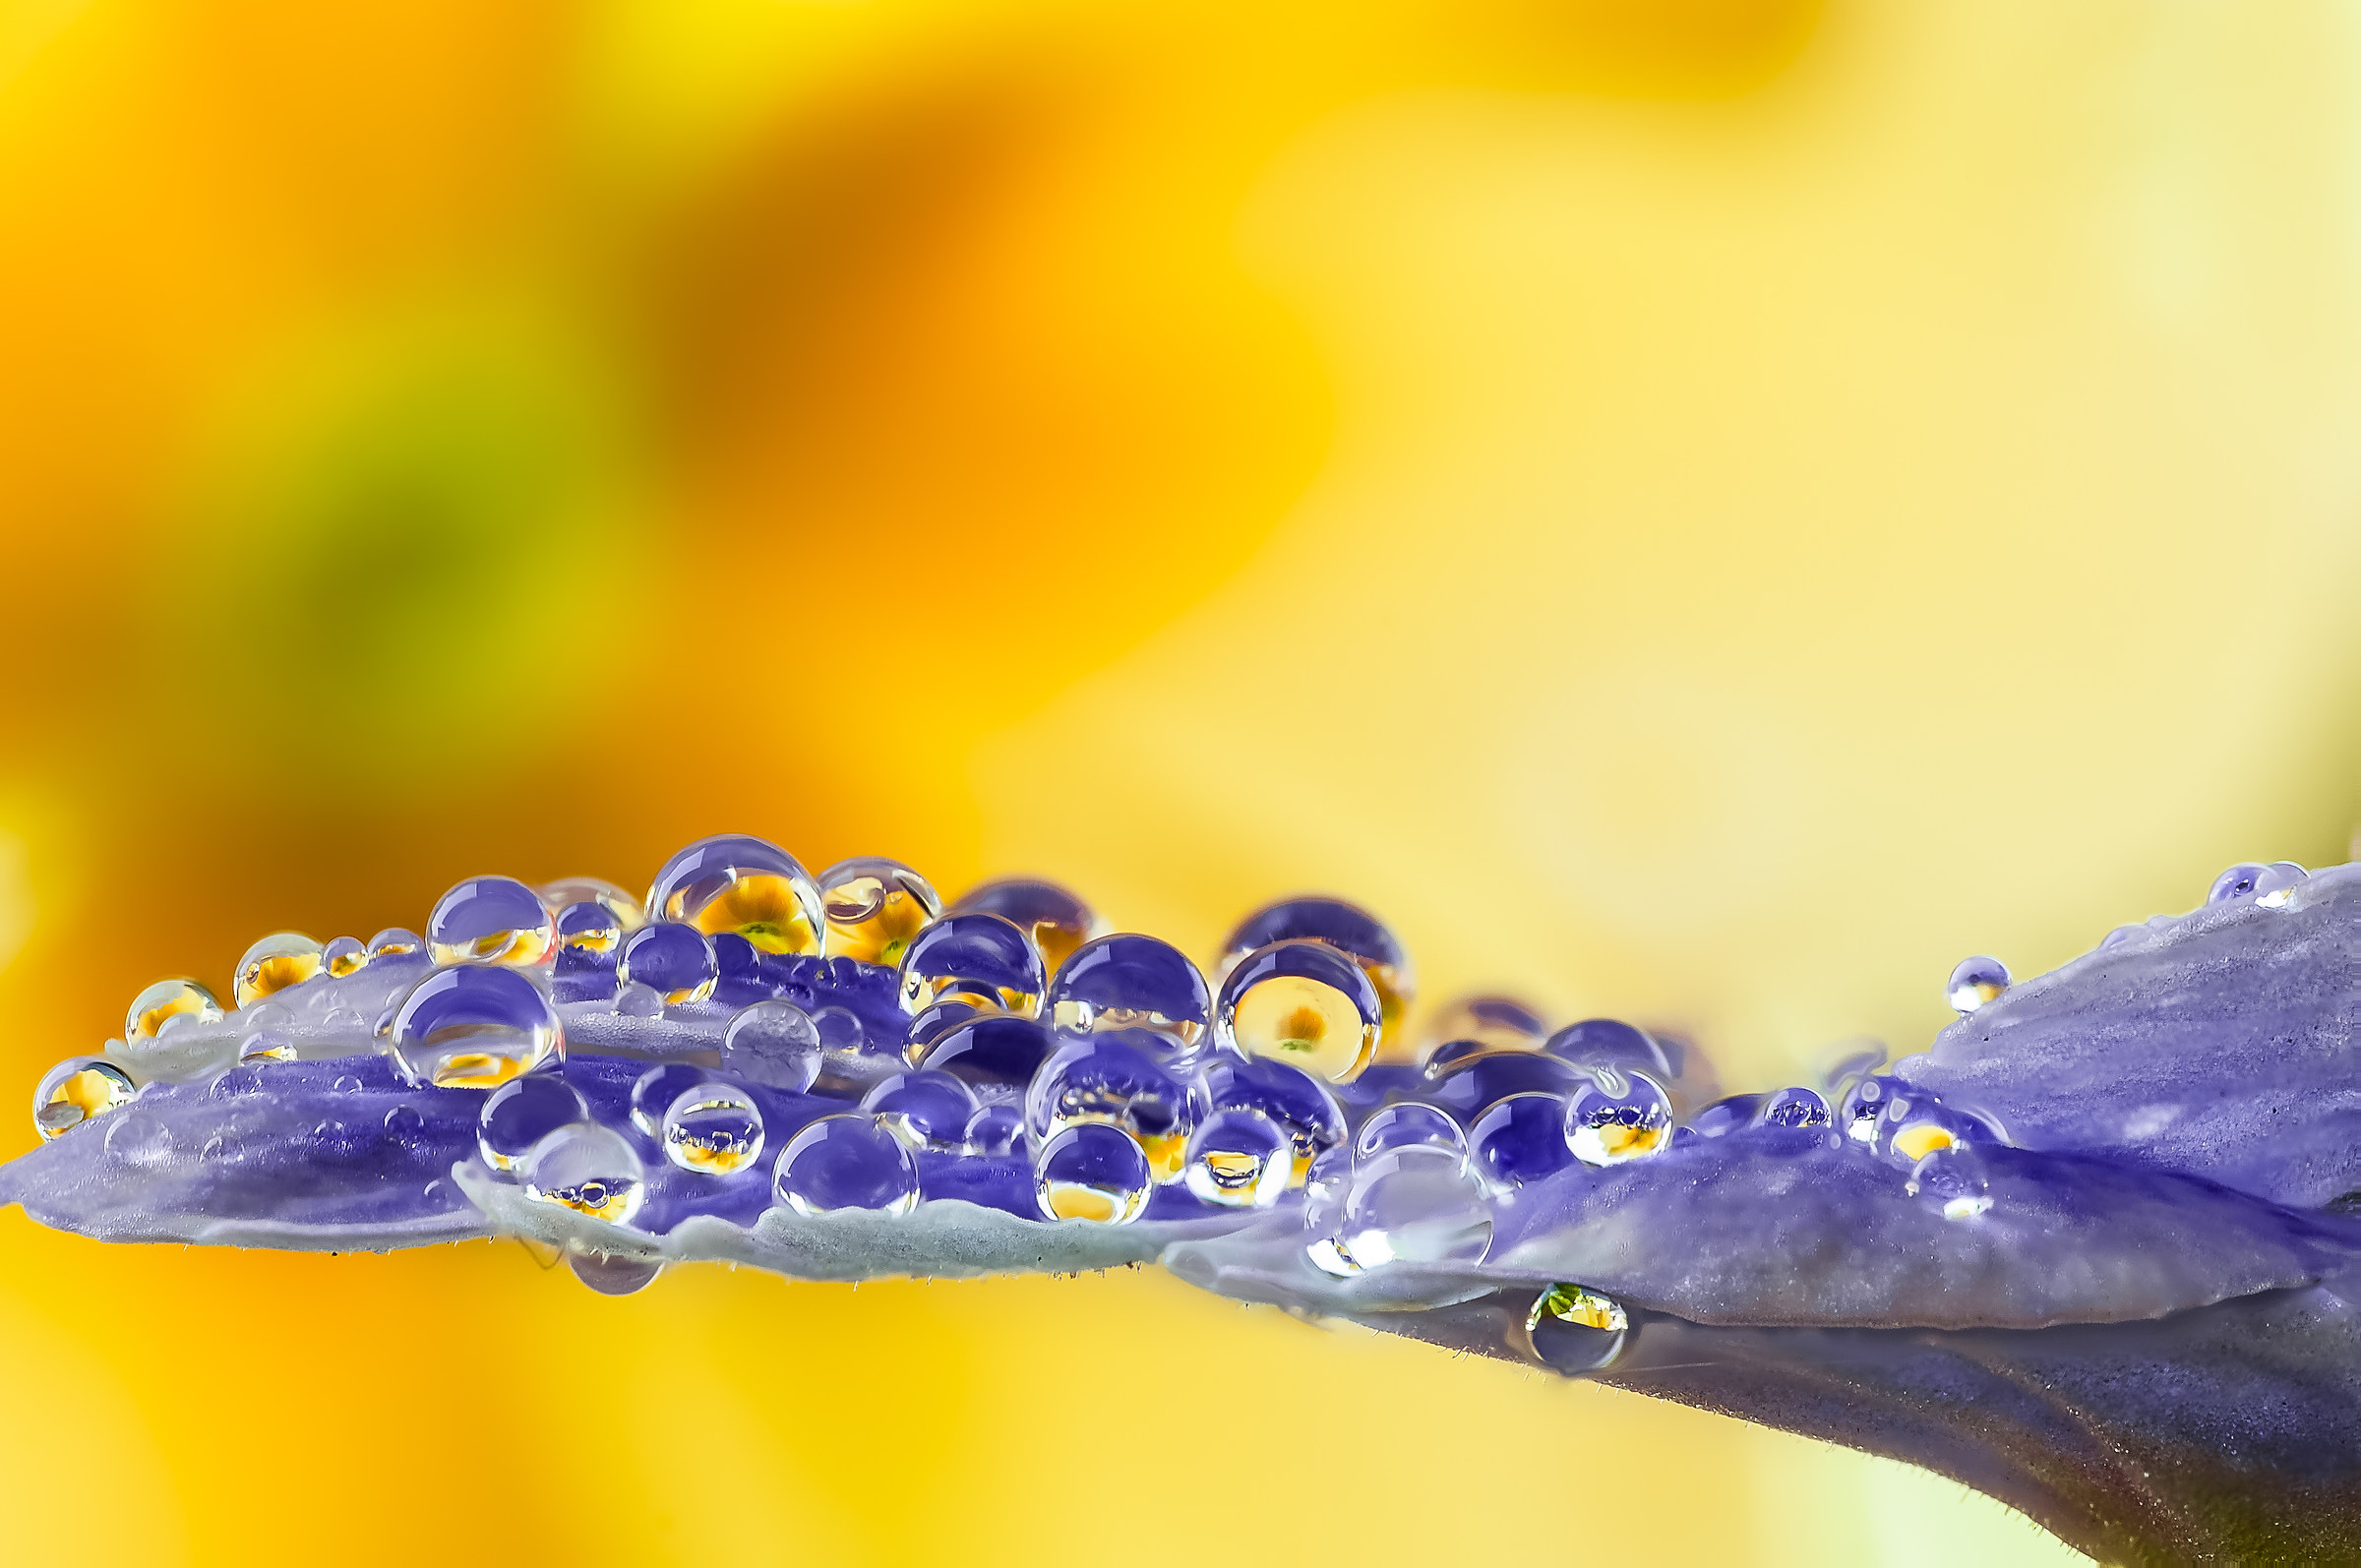 Drops & Flowers Macro Photography by Mario Jr Nicorelli...